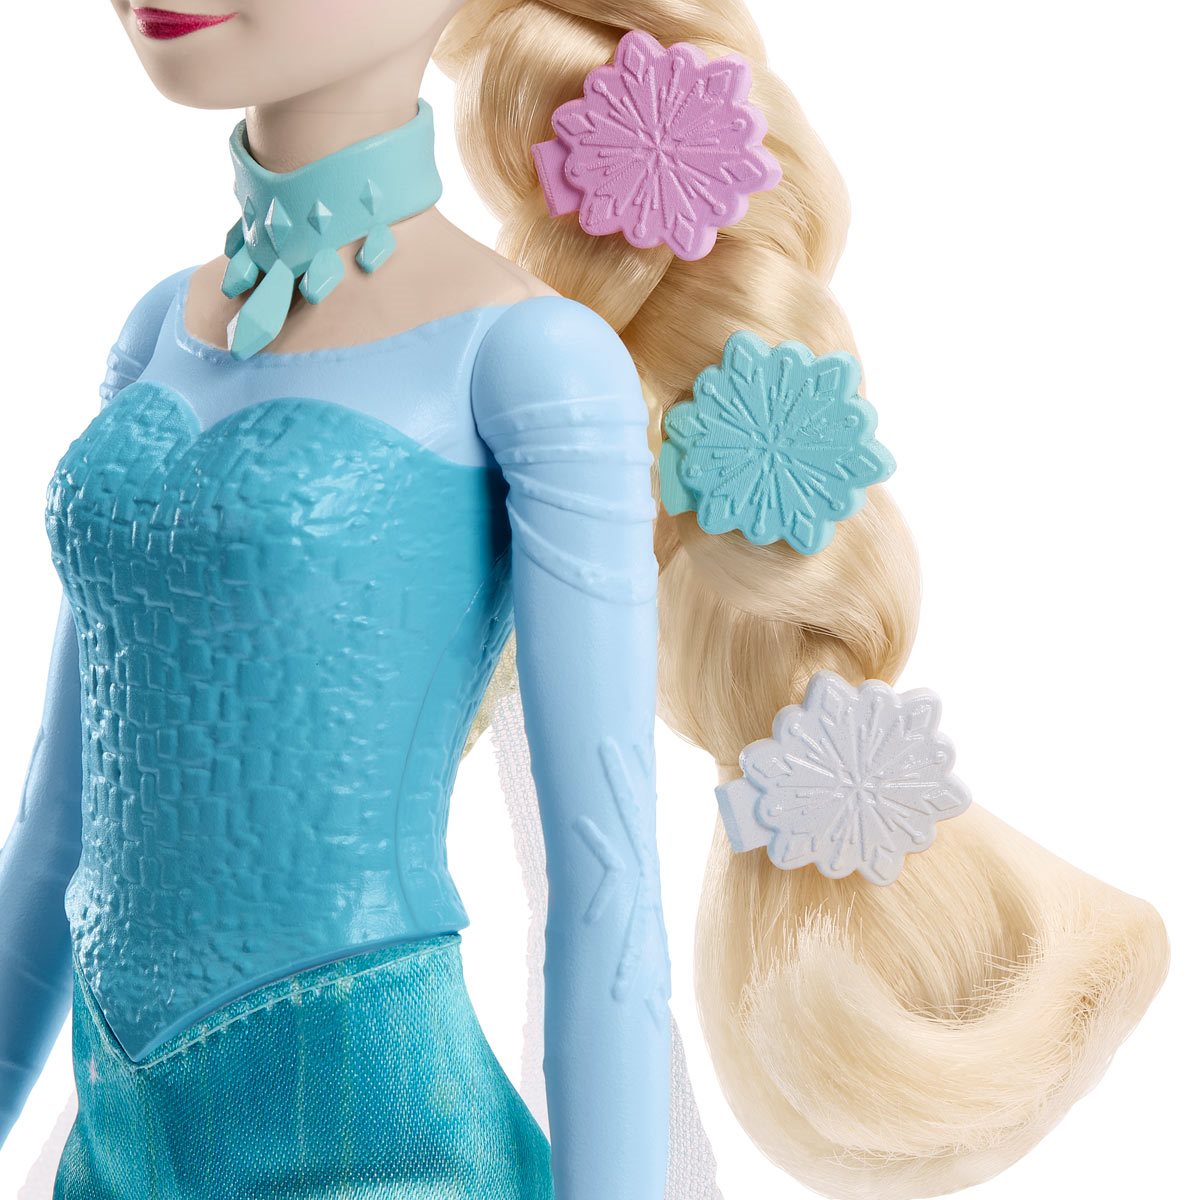 Disney Frozen Getting Ready Elsa Doll - Entertainment Earth